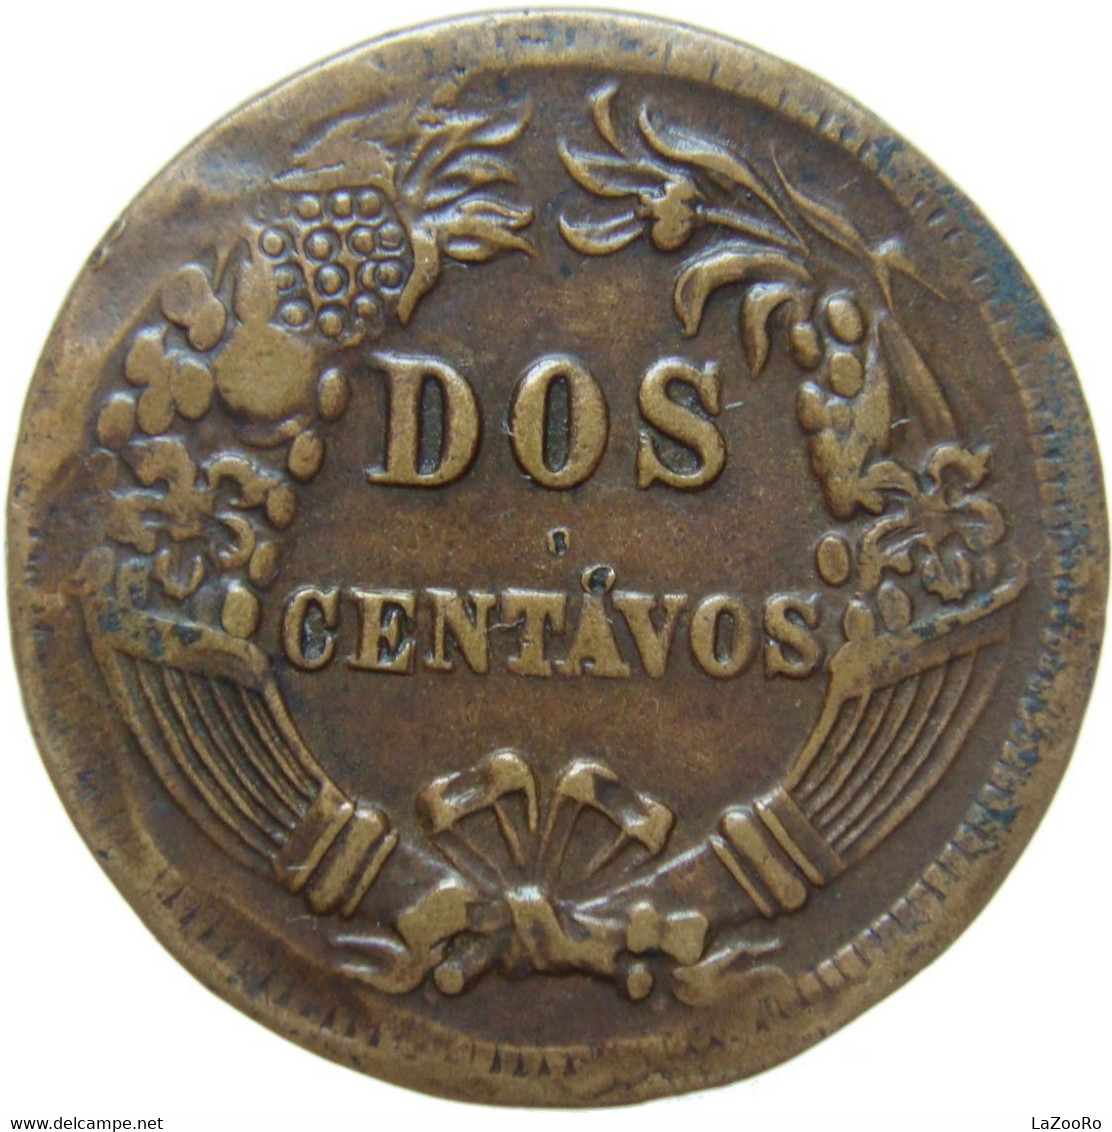 LaZooRo: Peru 2 Centavos 1878 VF - Peru